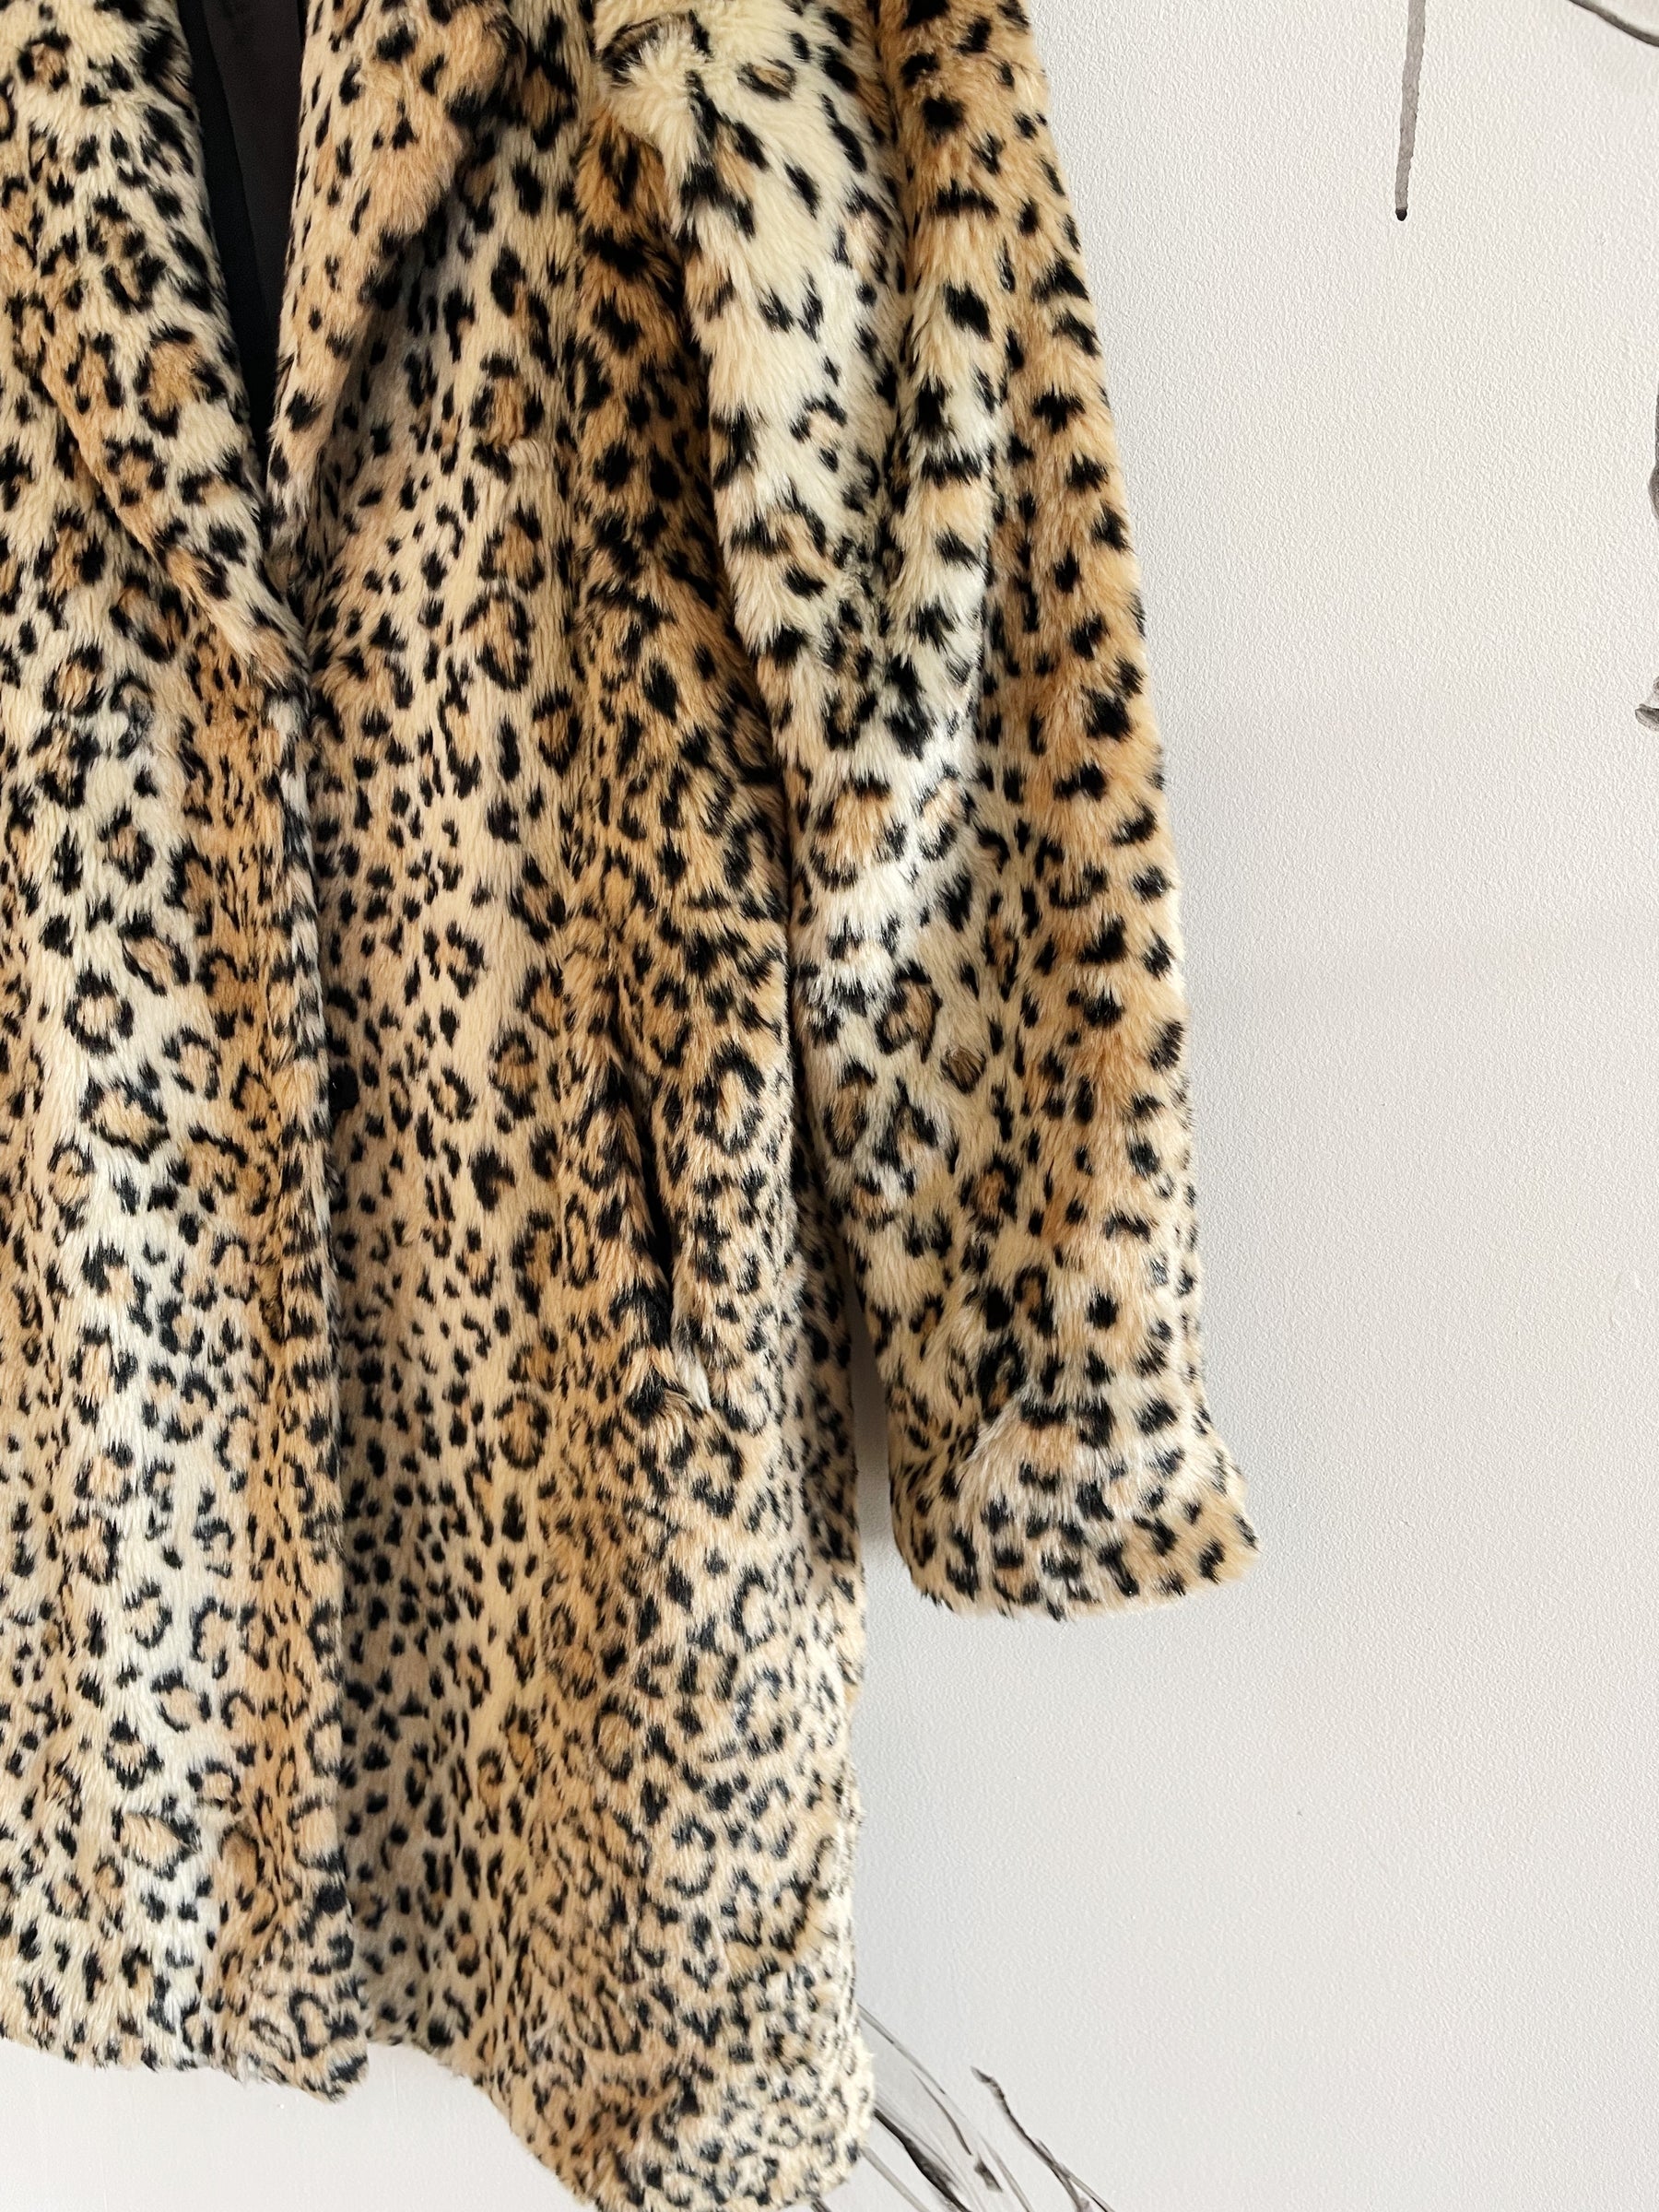 Noir leopard frakke